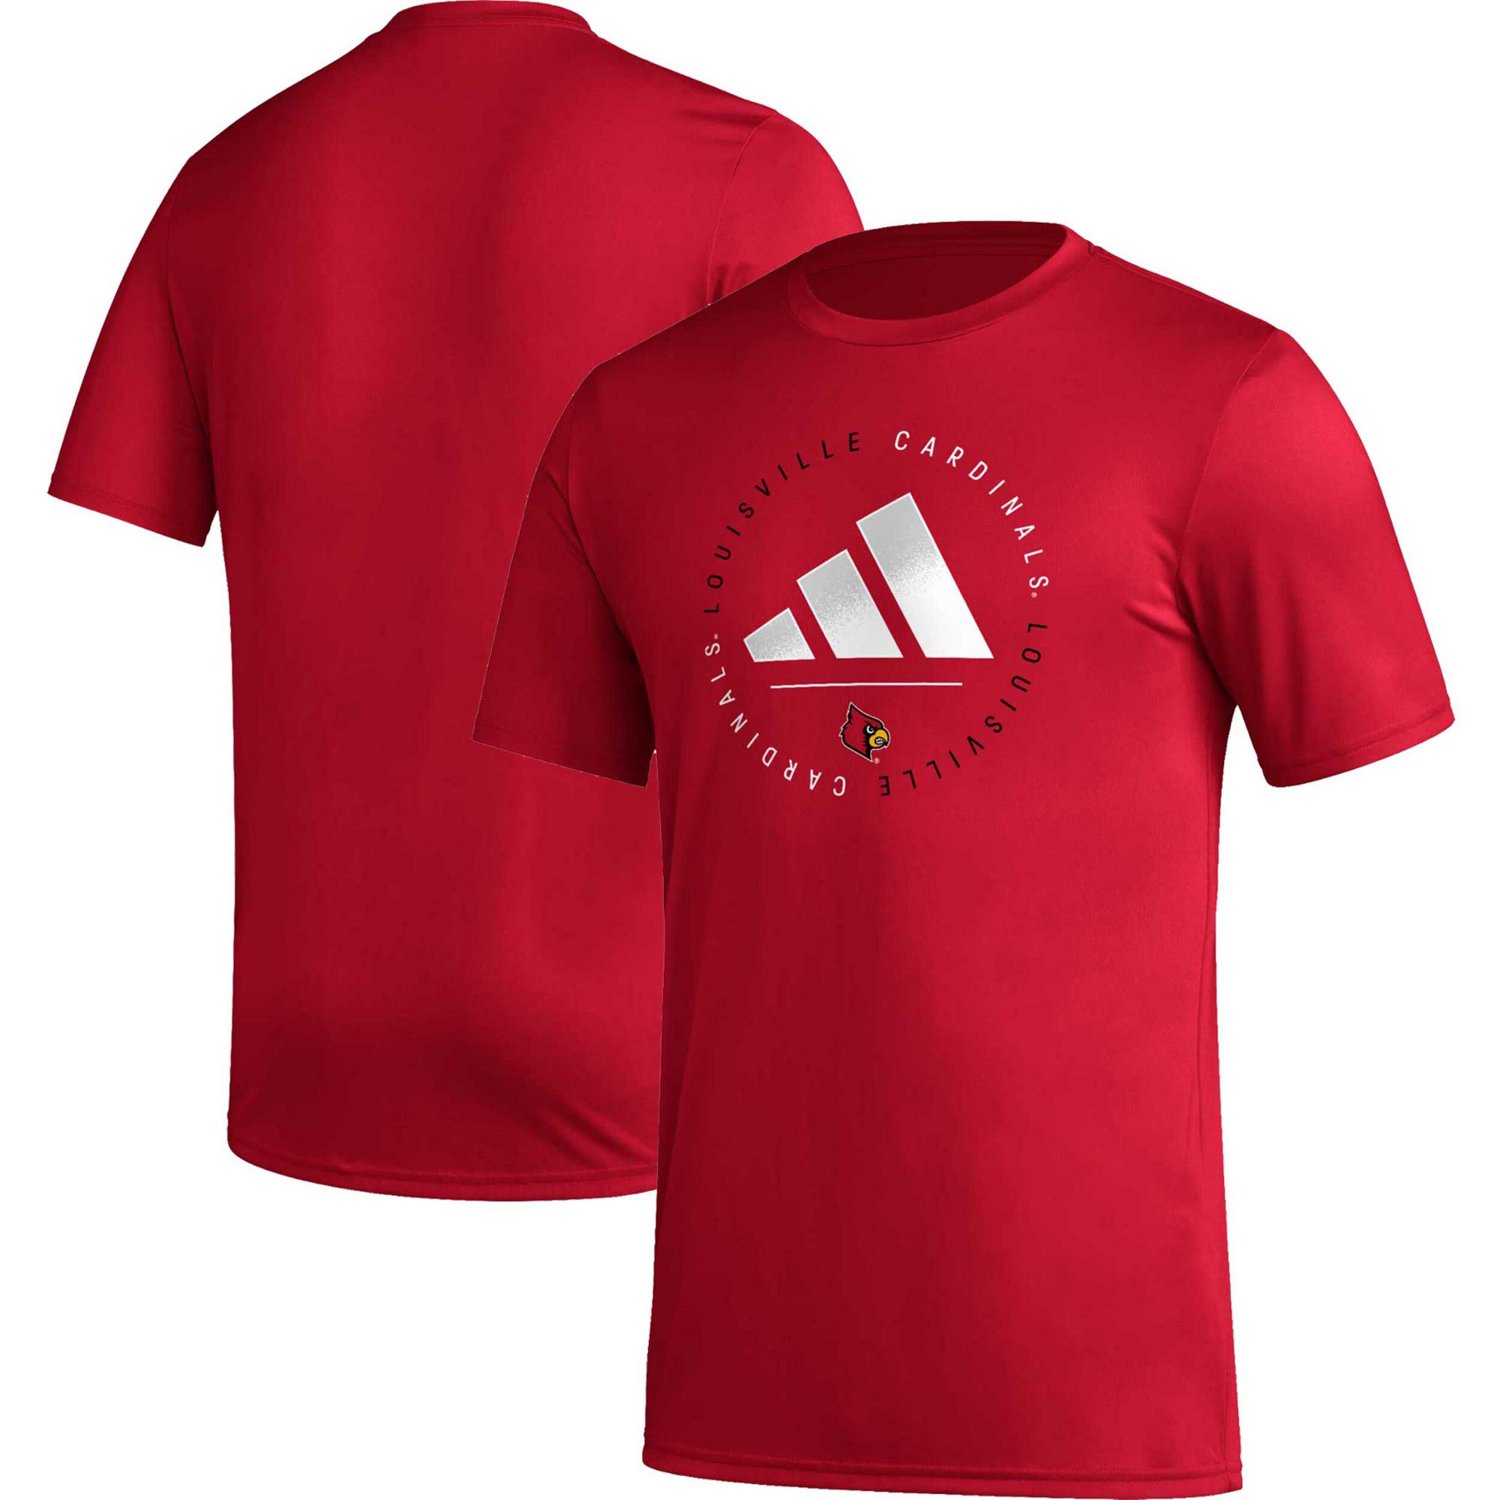 Girls Louisville Cardinals Sports Fan Shirts for sale